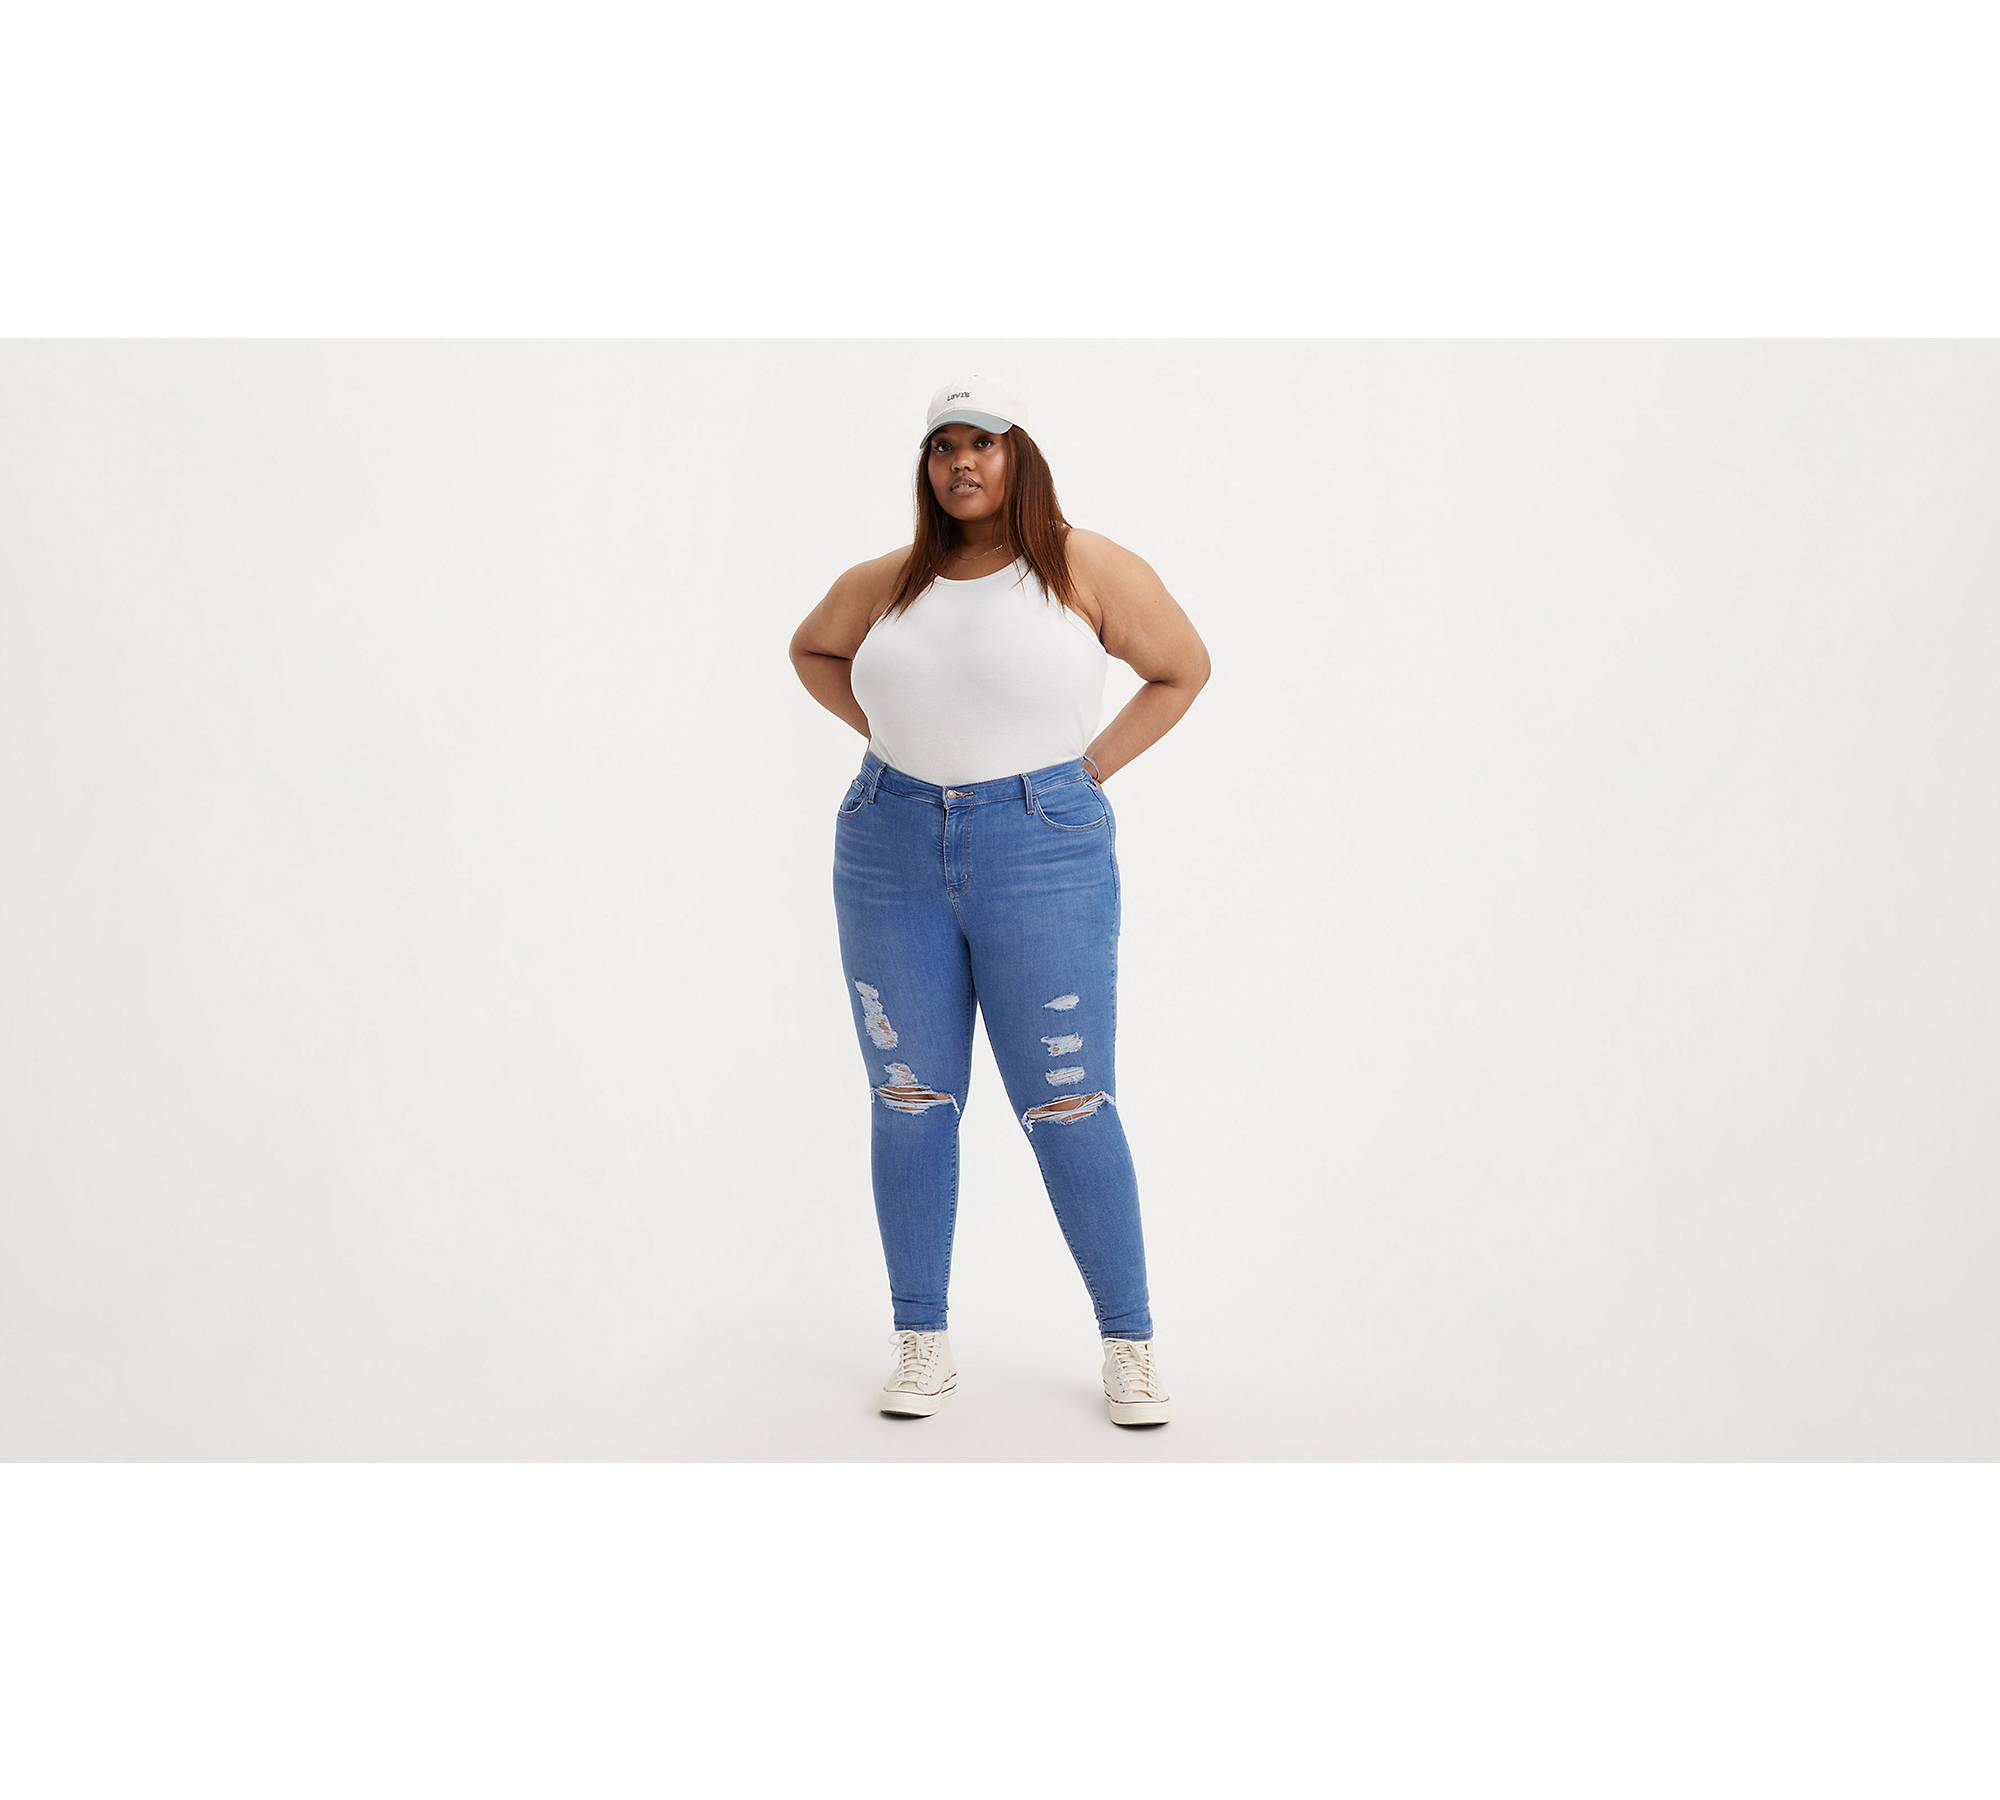 720 High Rise Super Skinny Women's Jeans (plus Size) - Medium Wash